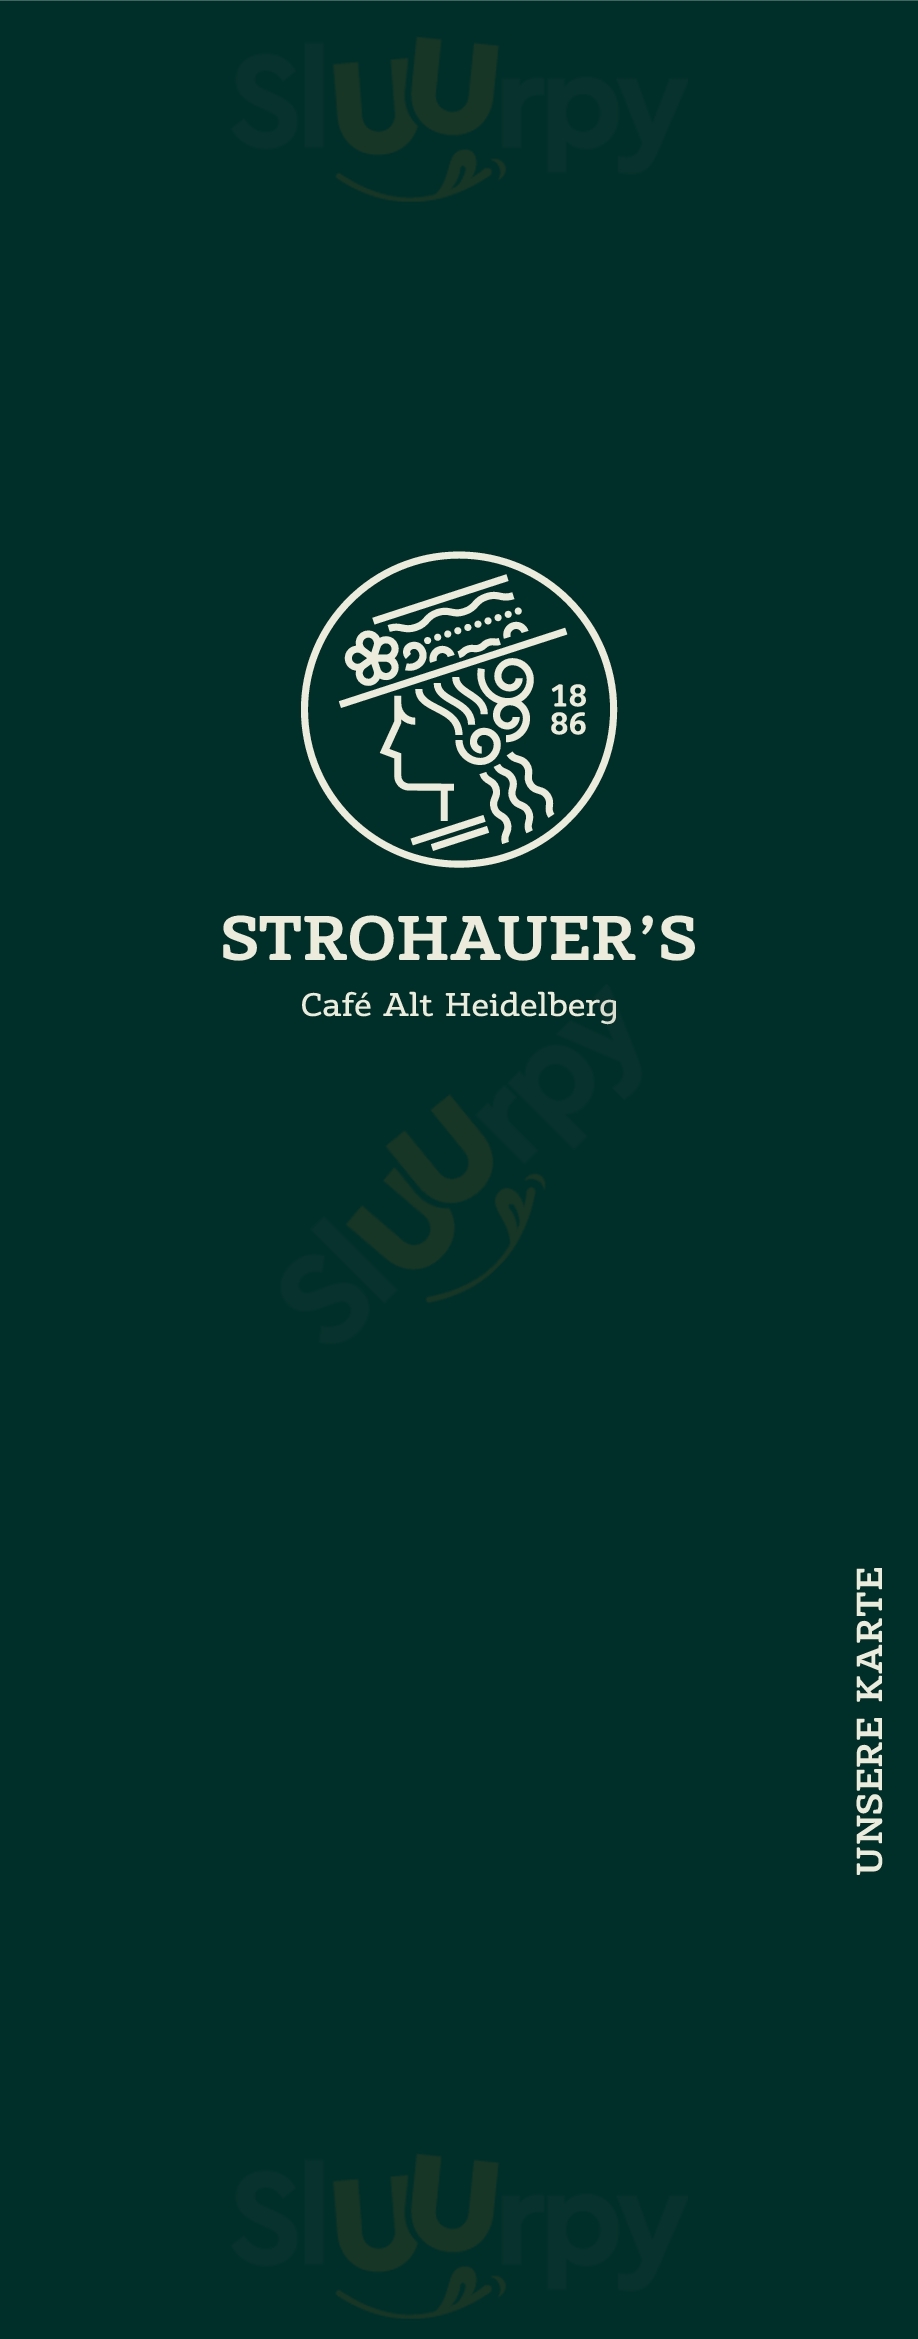 Strohauer's Cafe Alt Heidelberg Heidelberg Menu - 1